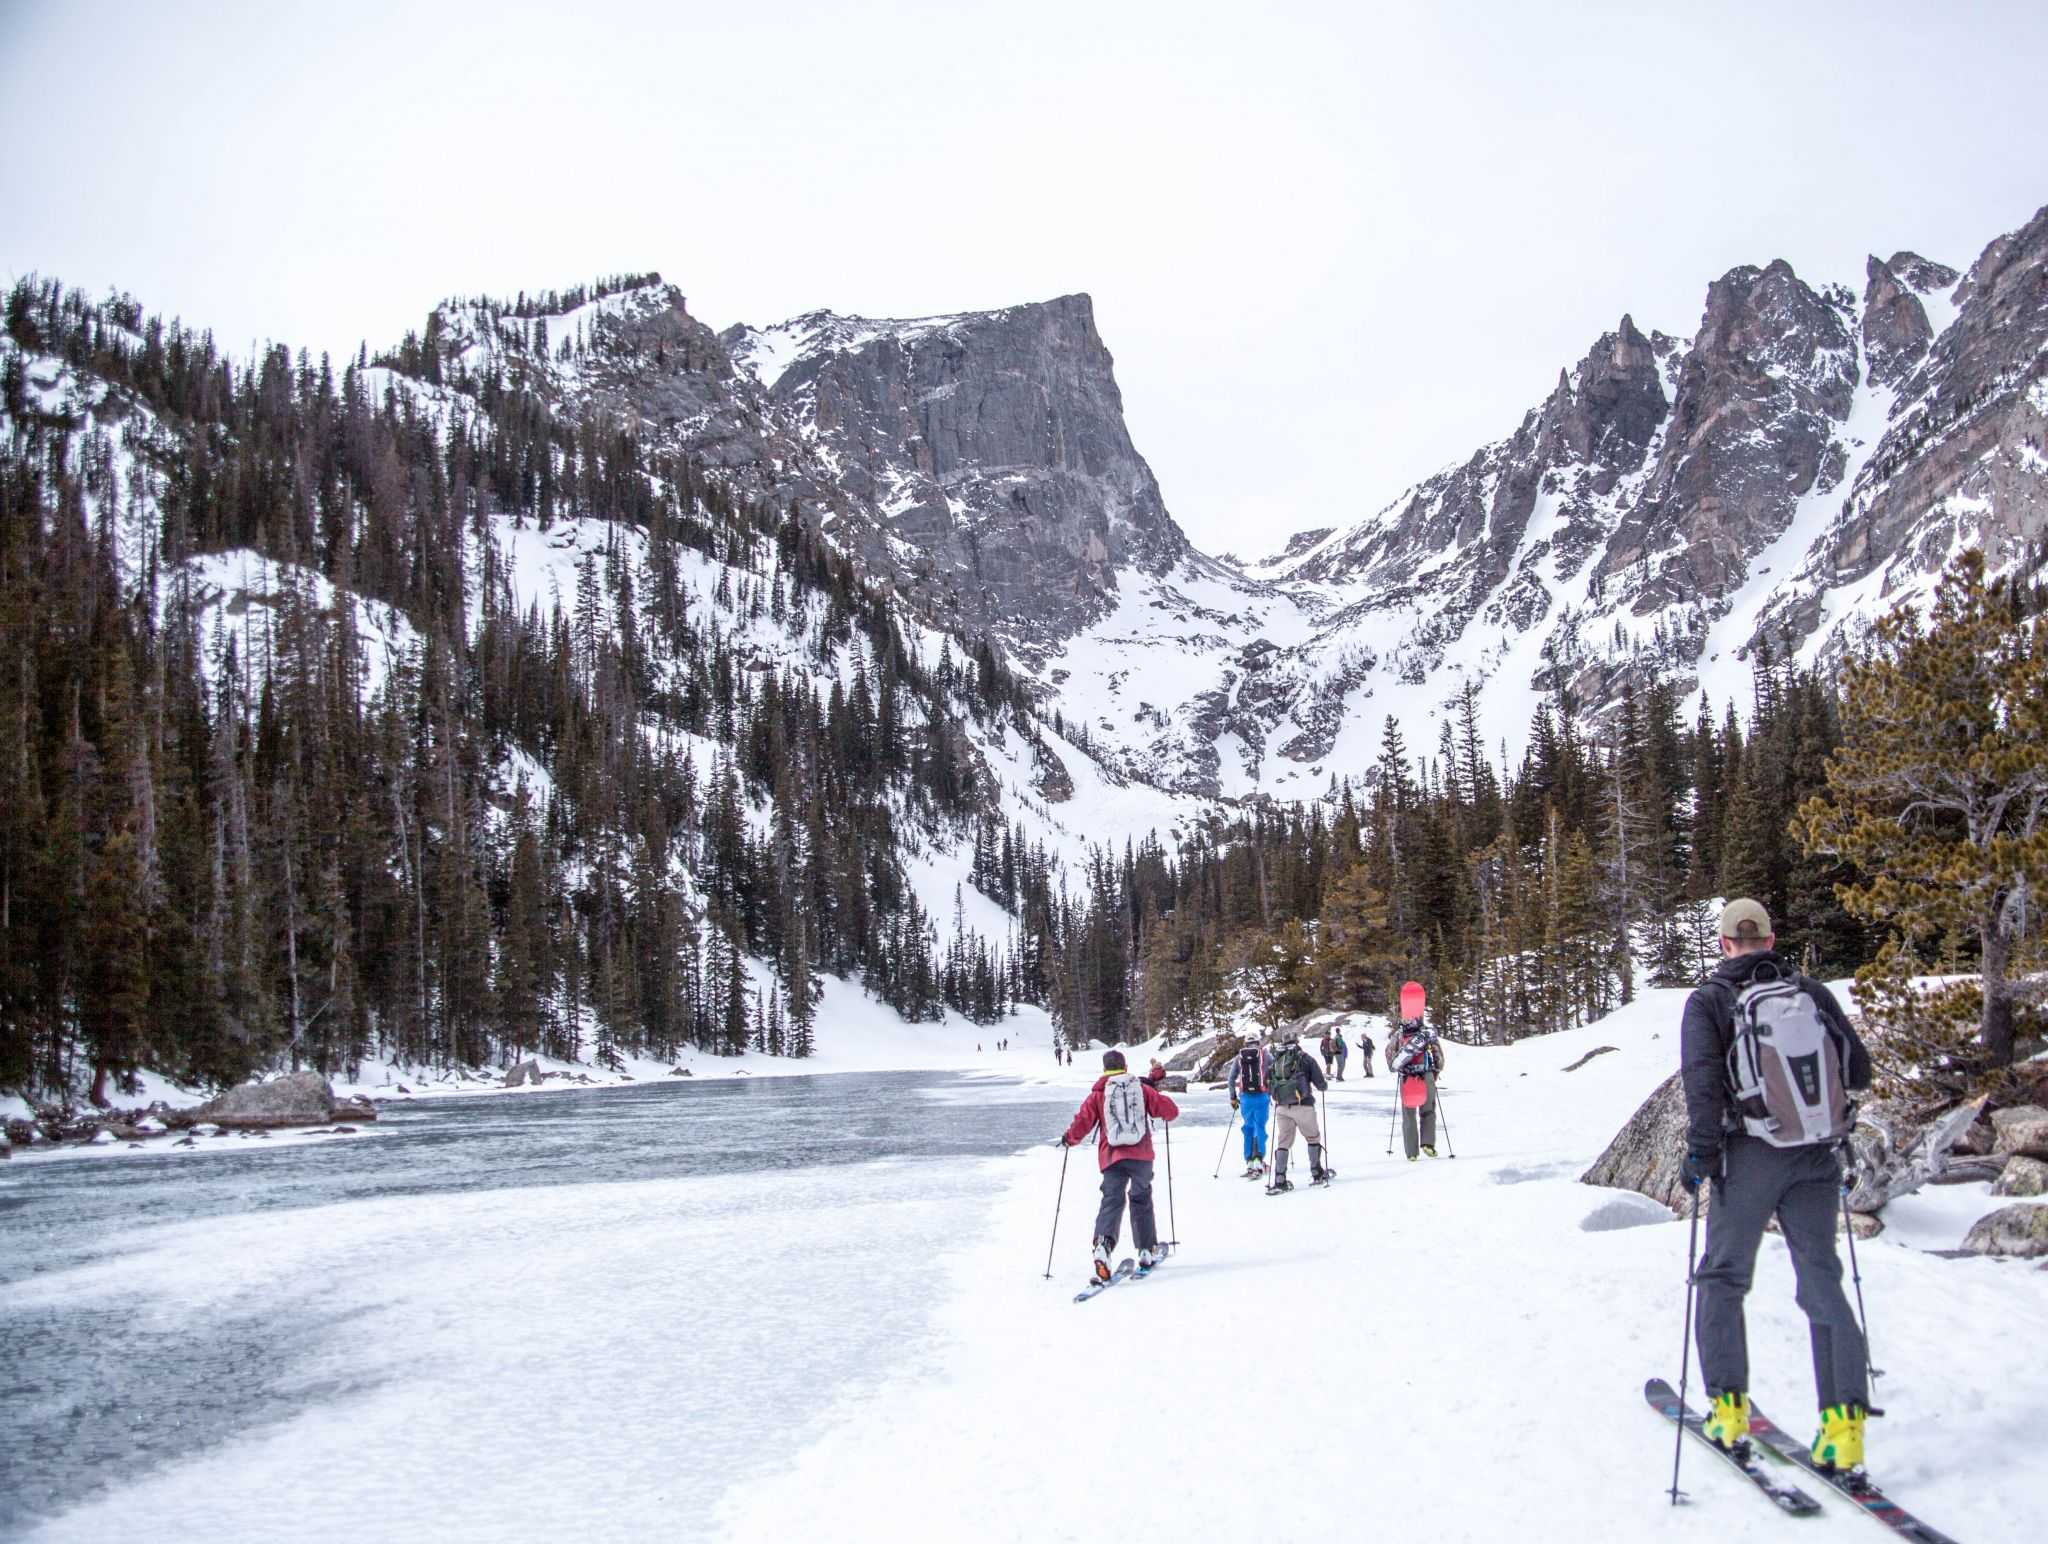 Eli, leading the way across a frozen lake. Photo: Nevin Fowler